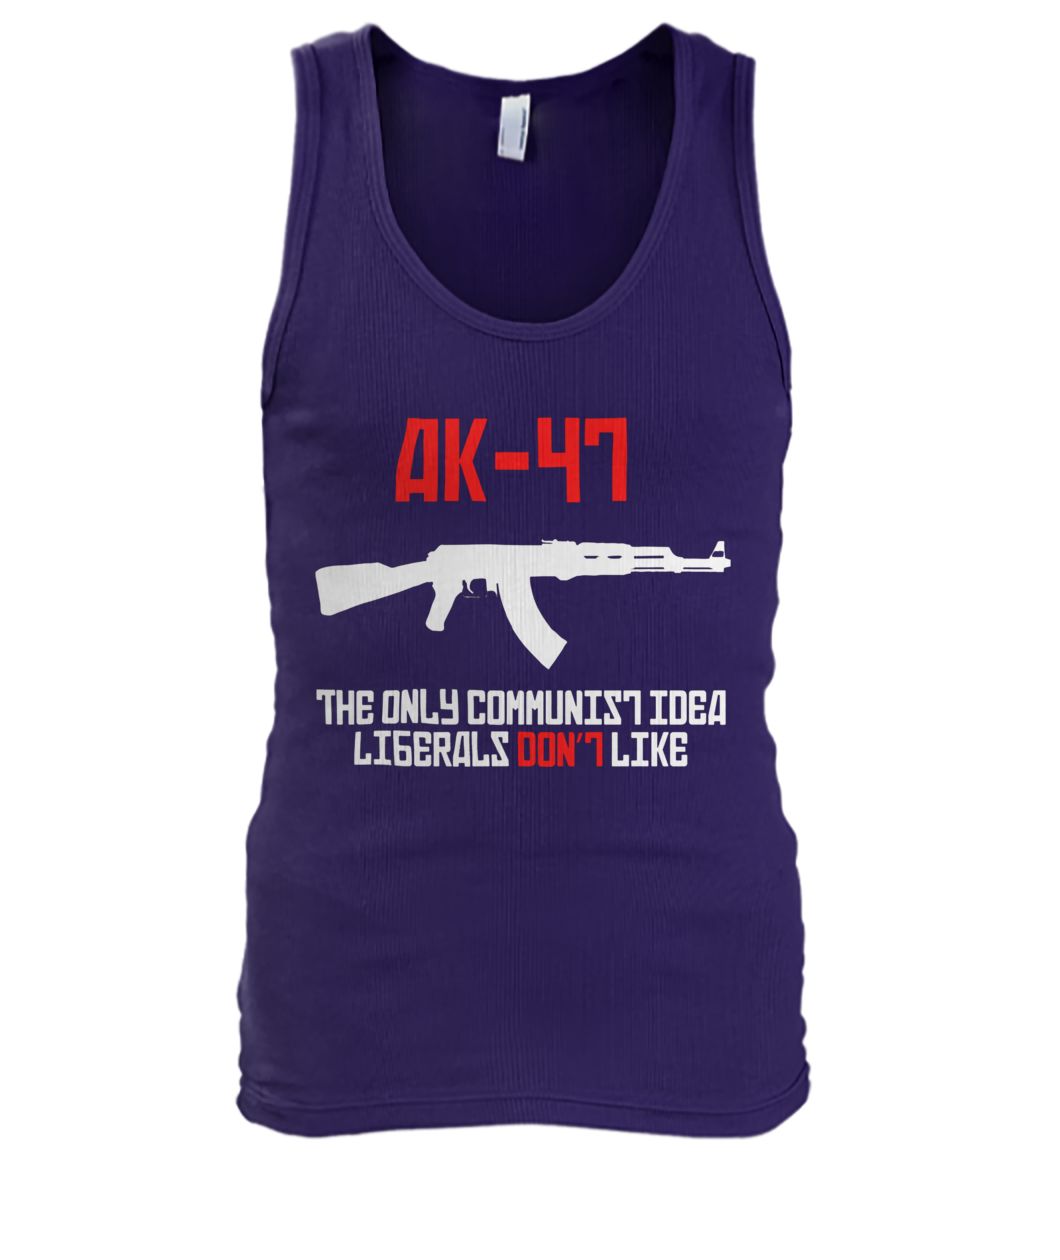 AK 47 the only communist idea liberals don't like men's tank top